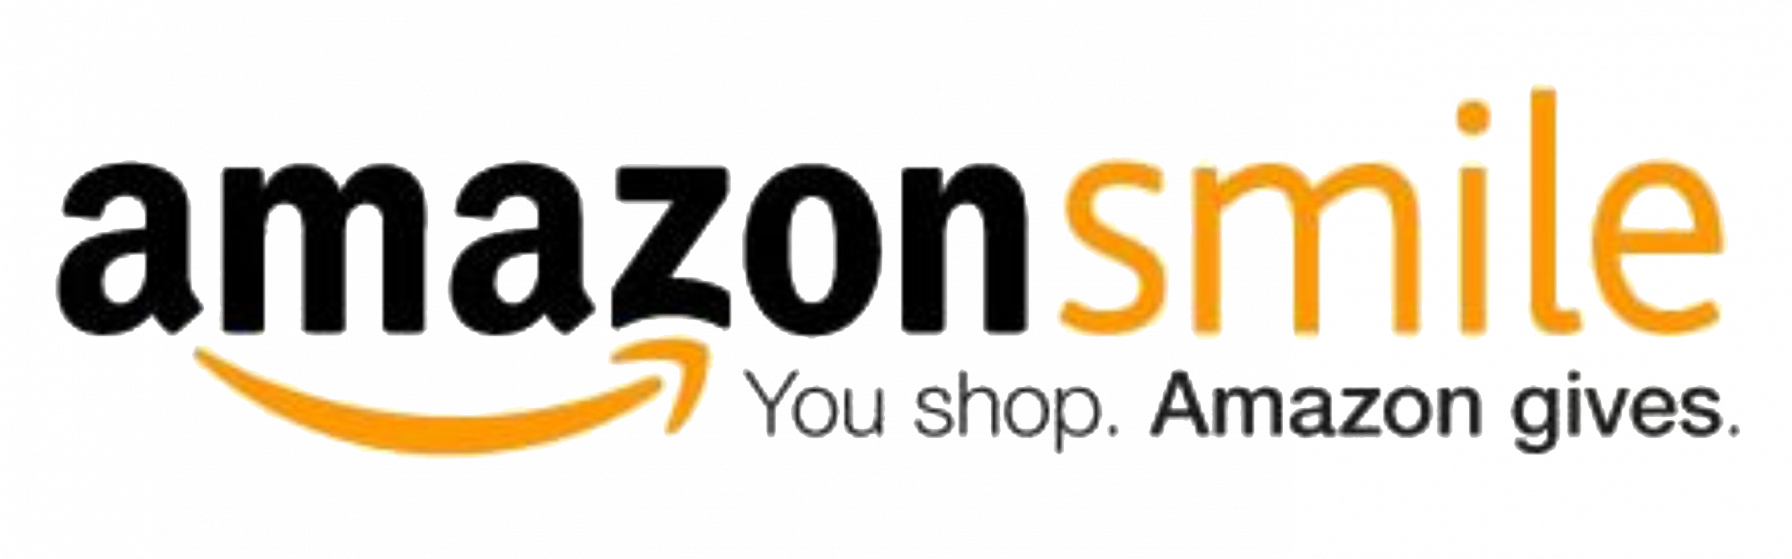 amazon smile - You shop. Amazon gives.